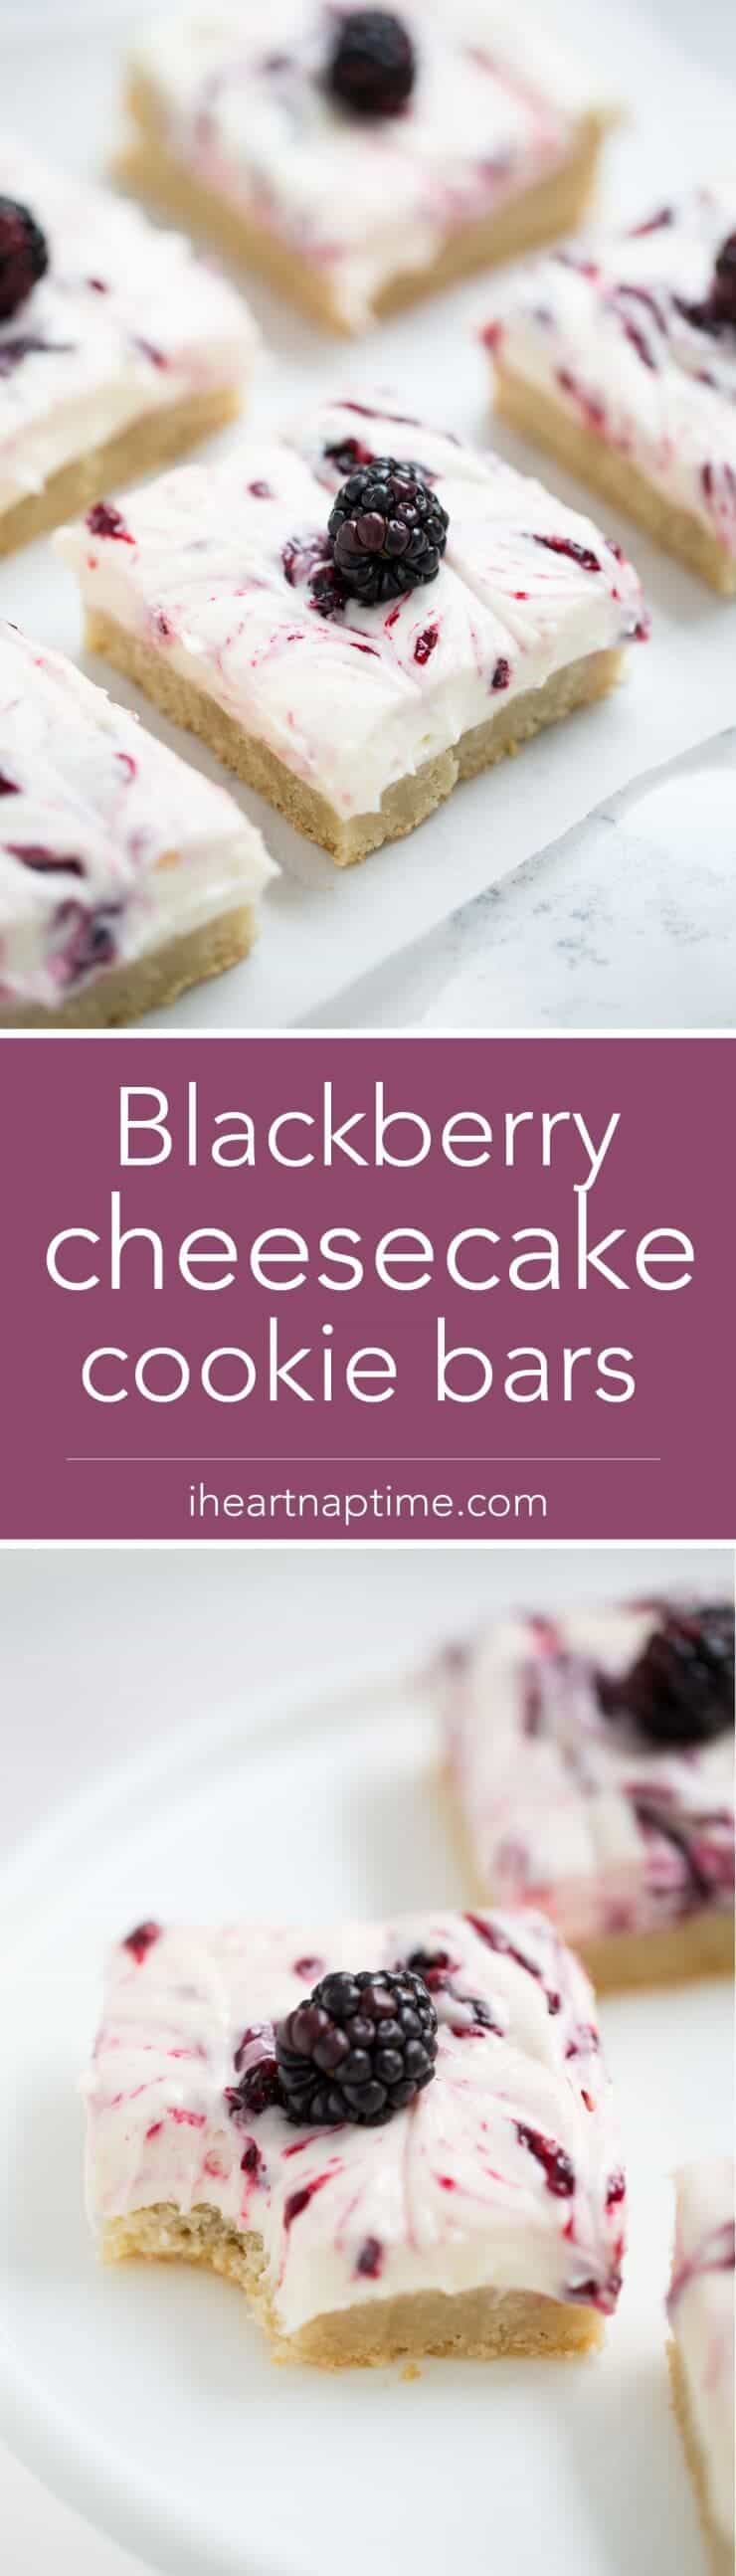 blackberry cheesecake bars